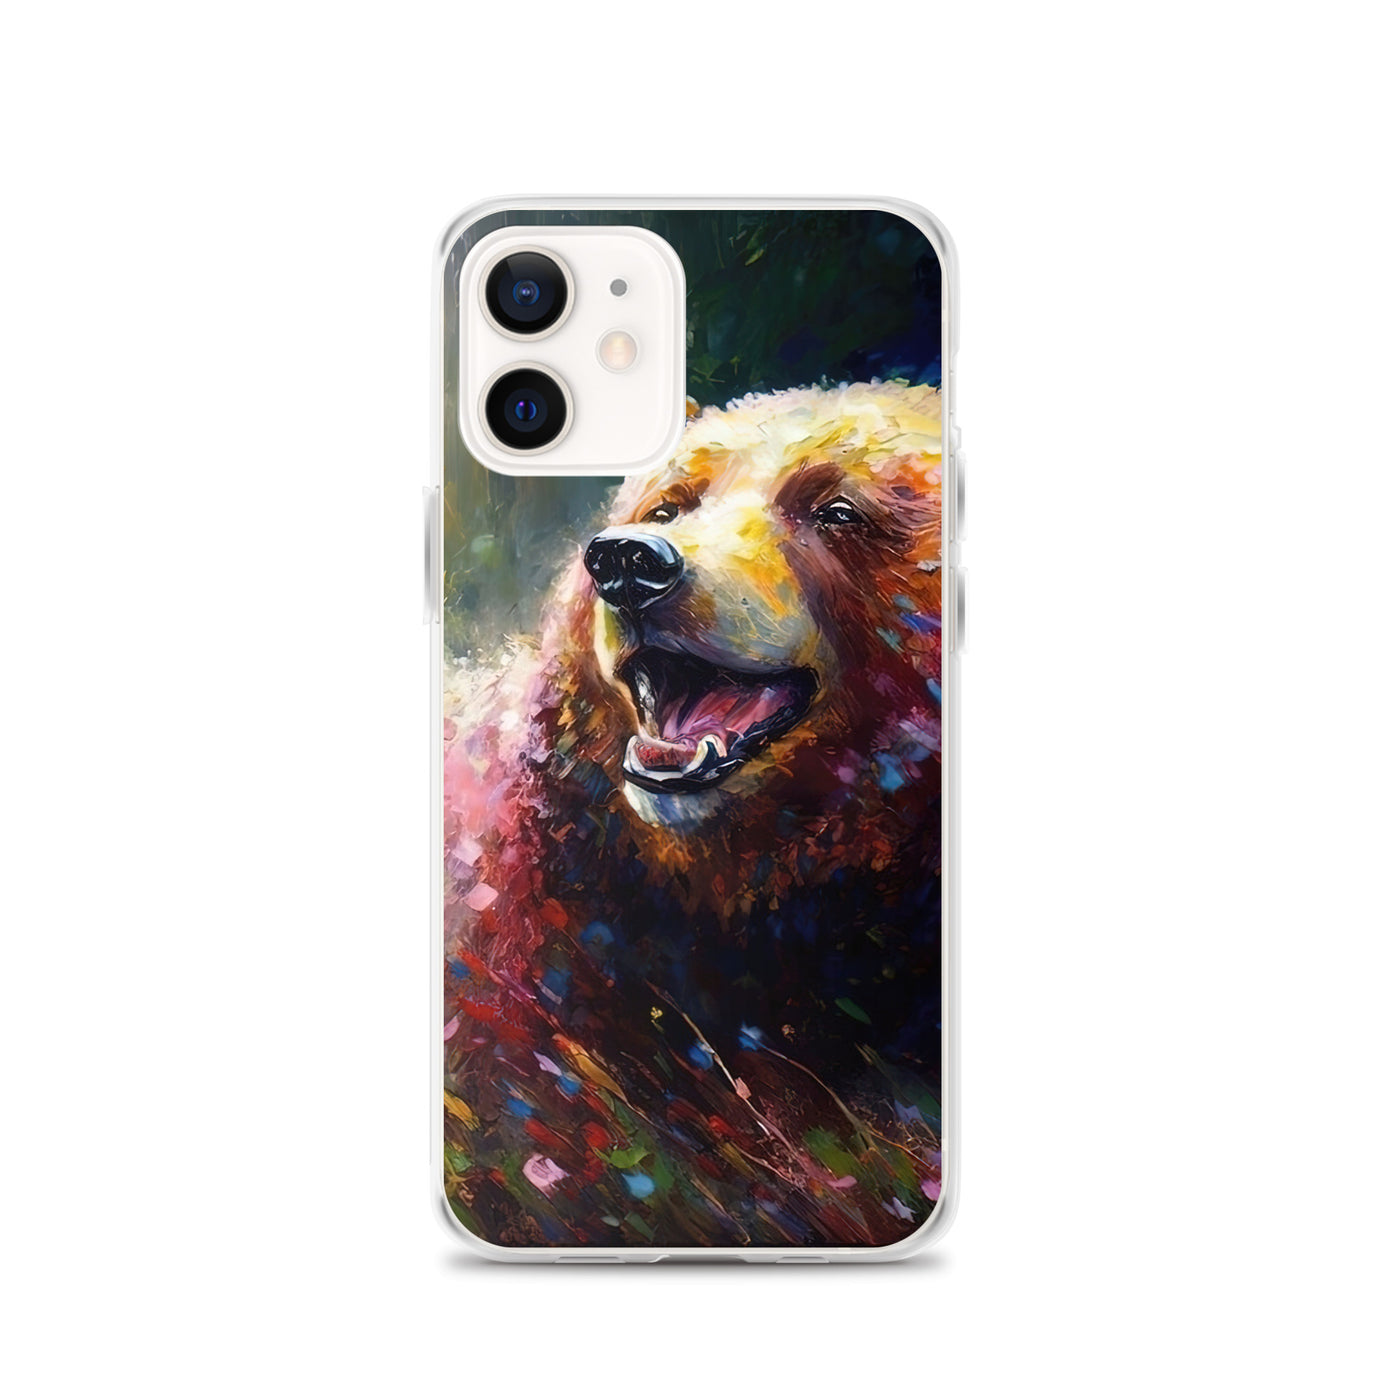 Süßer Bär - Ölmalerei - iPhone Schutzhülle (durchsichtig) camping xxx iPhone 12